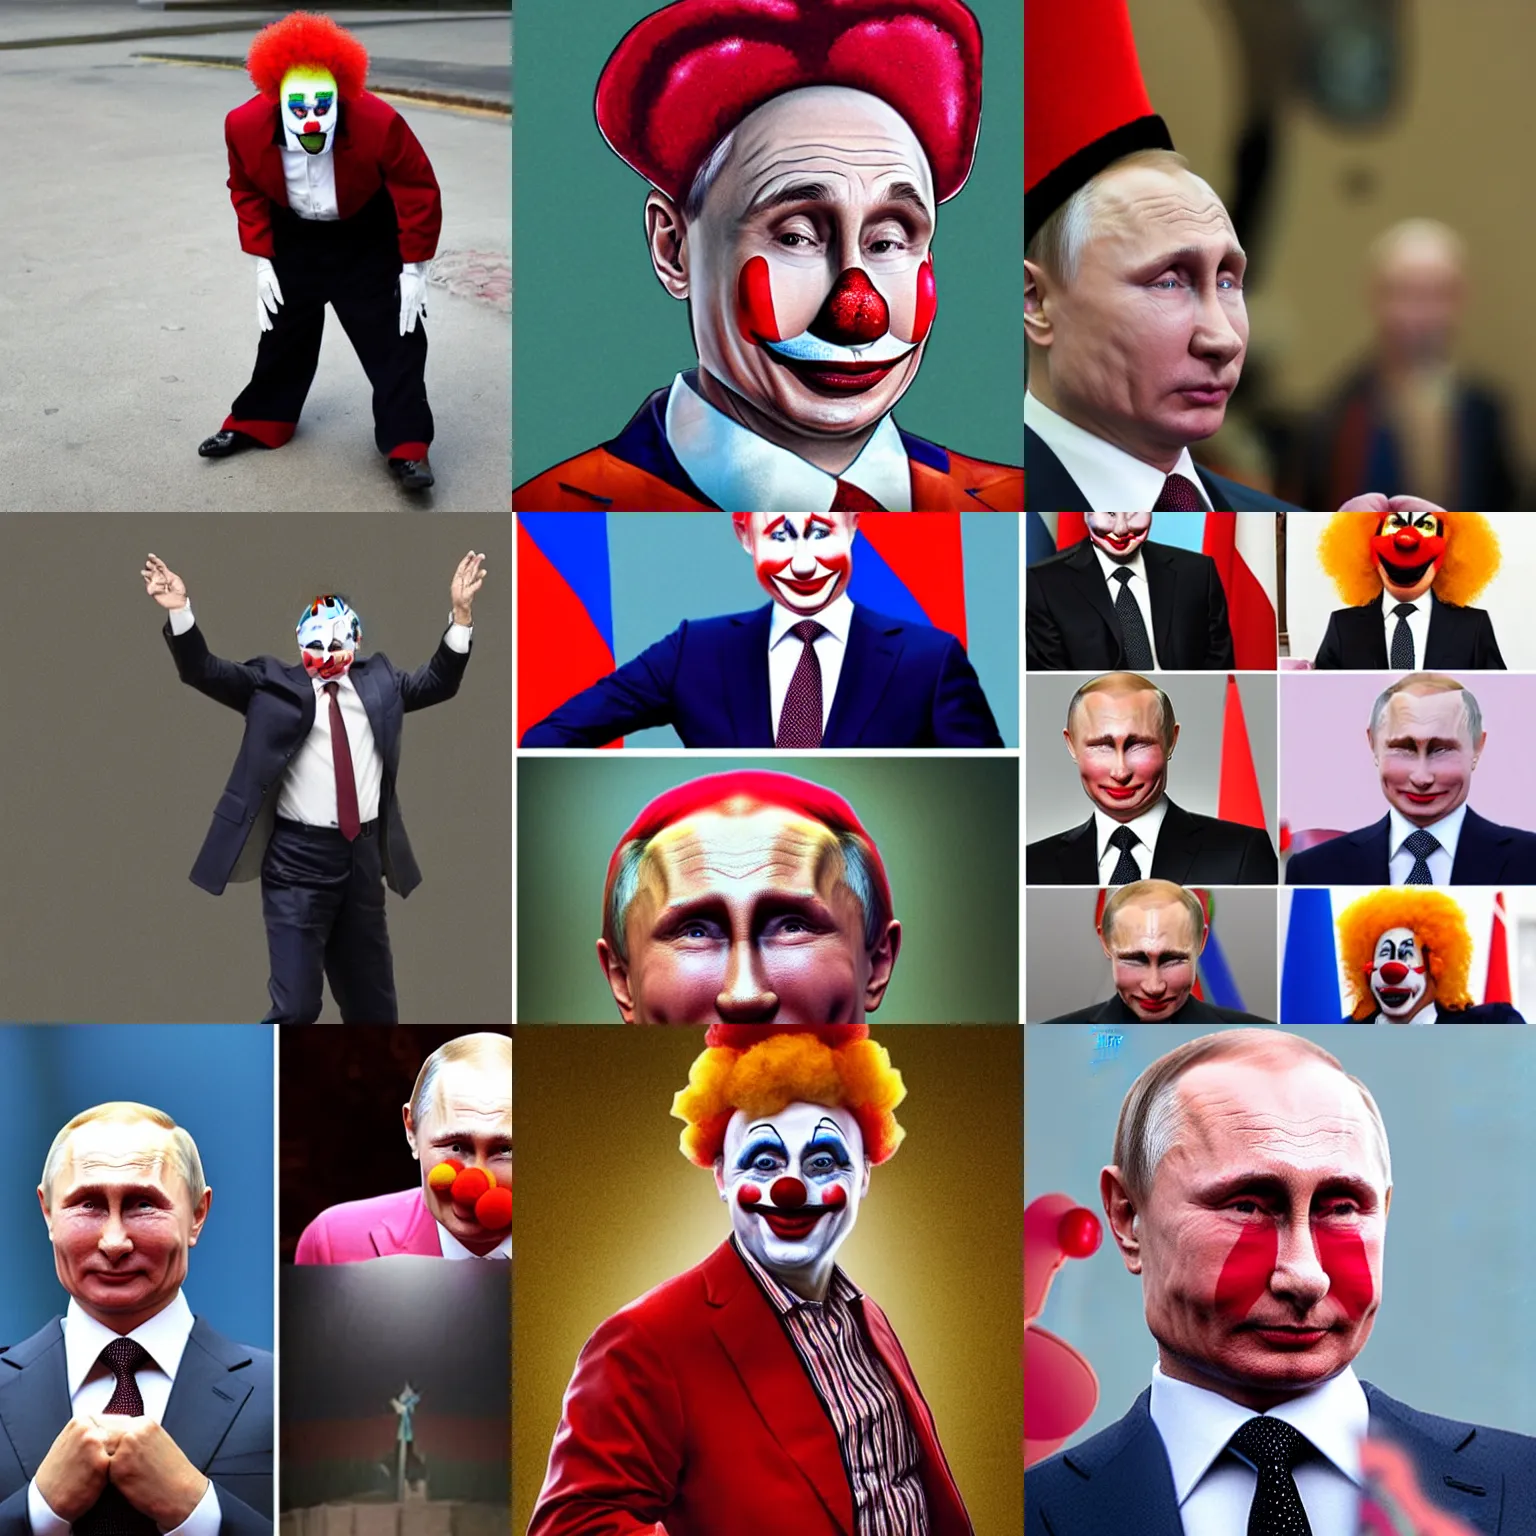 Prompt: Putin as a clown